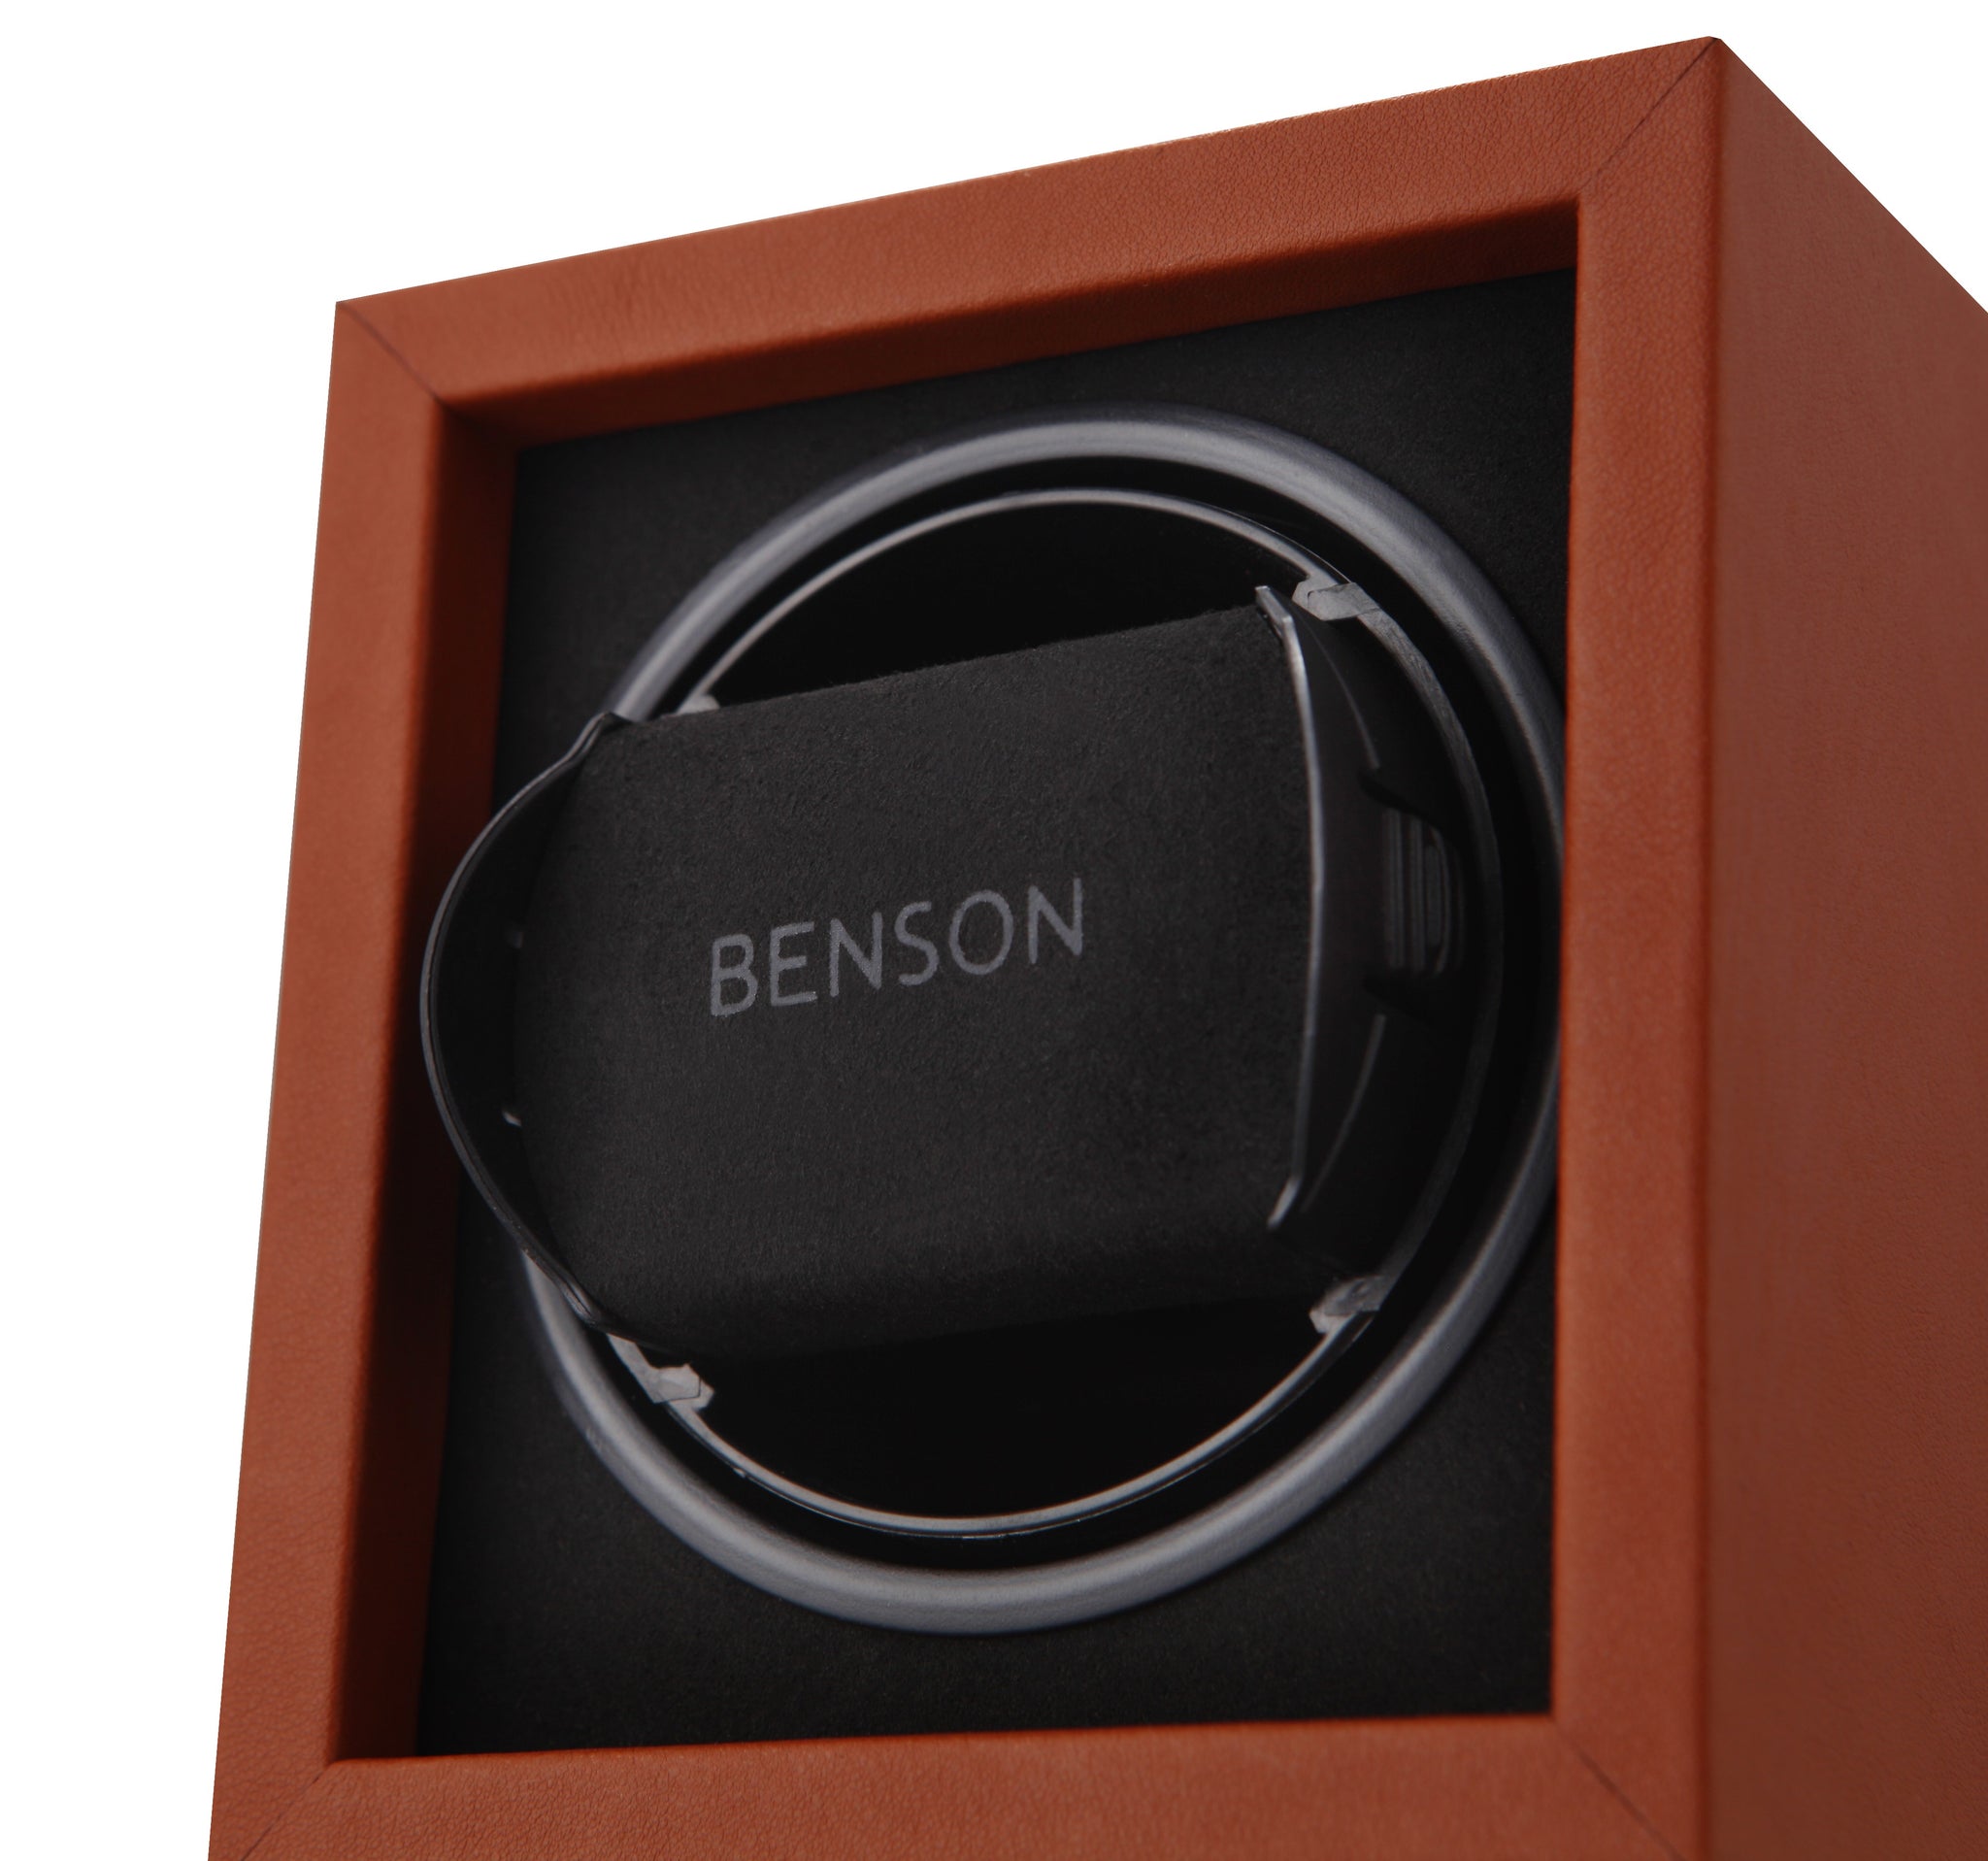 Benson Compact Series Single Watch winder